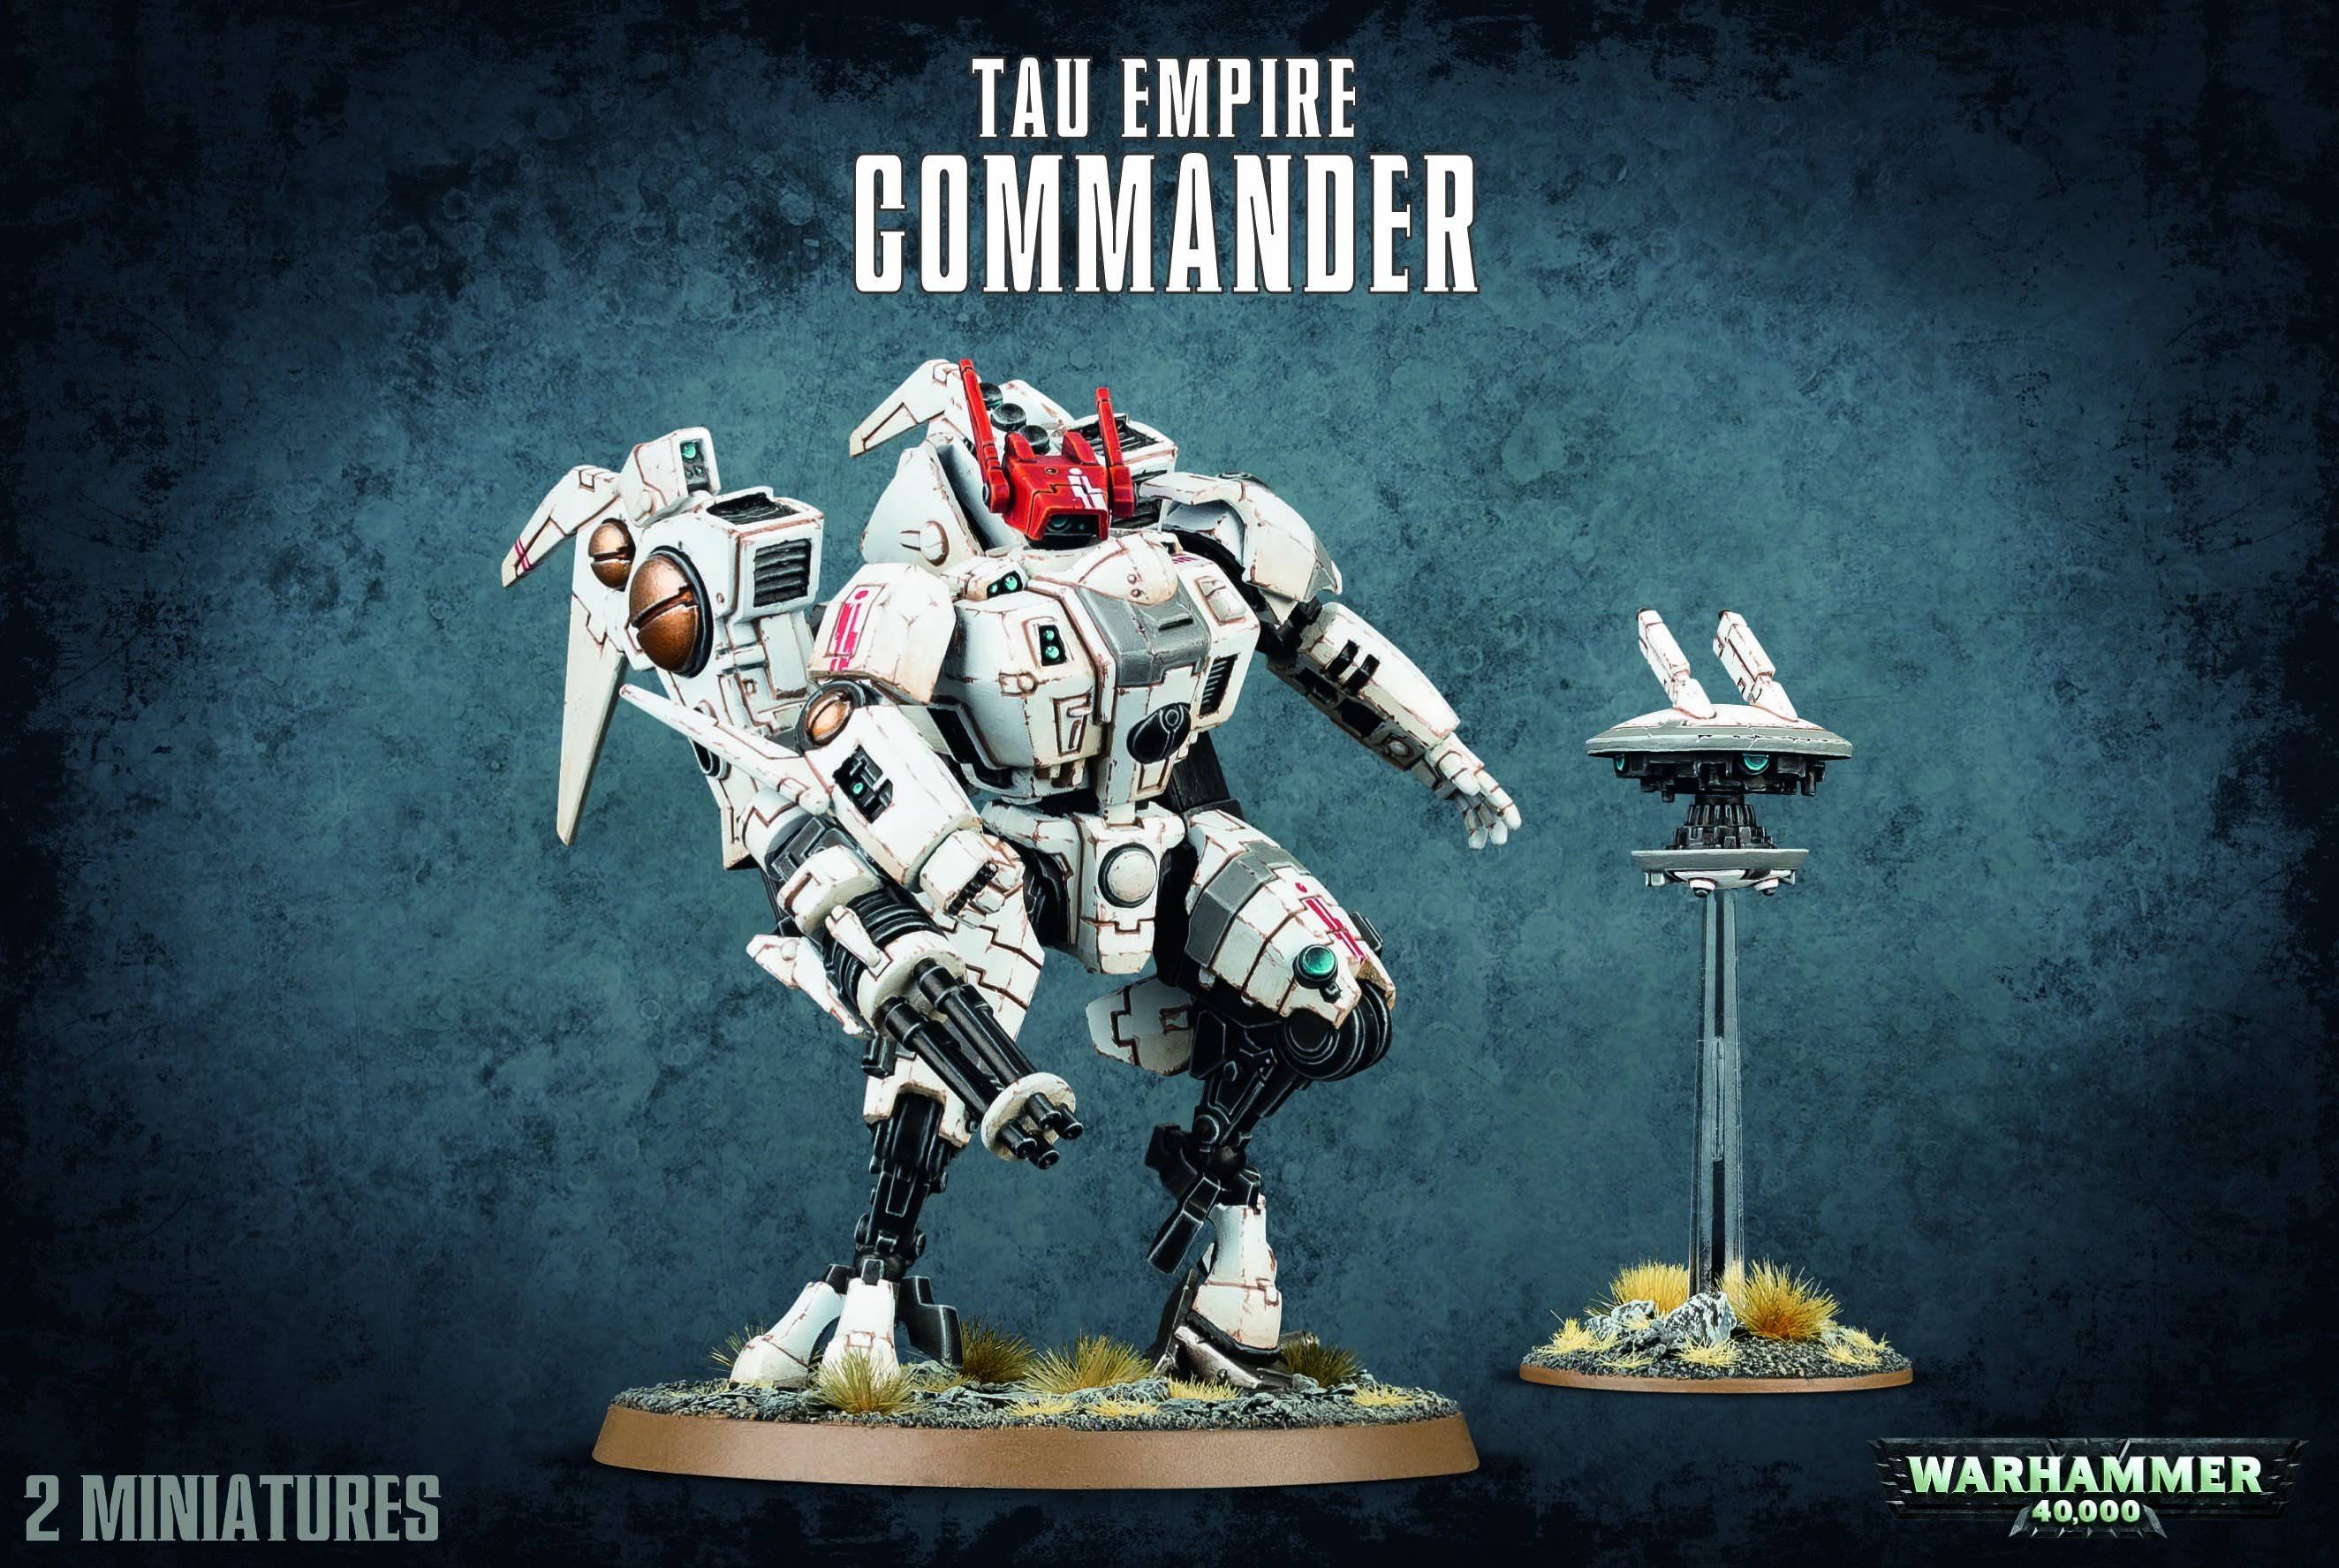 Warhammer Tau Empire Commander Miniature Figure